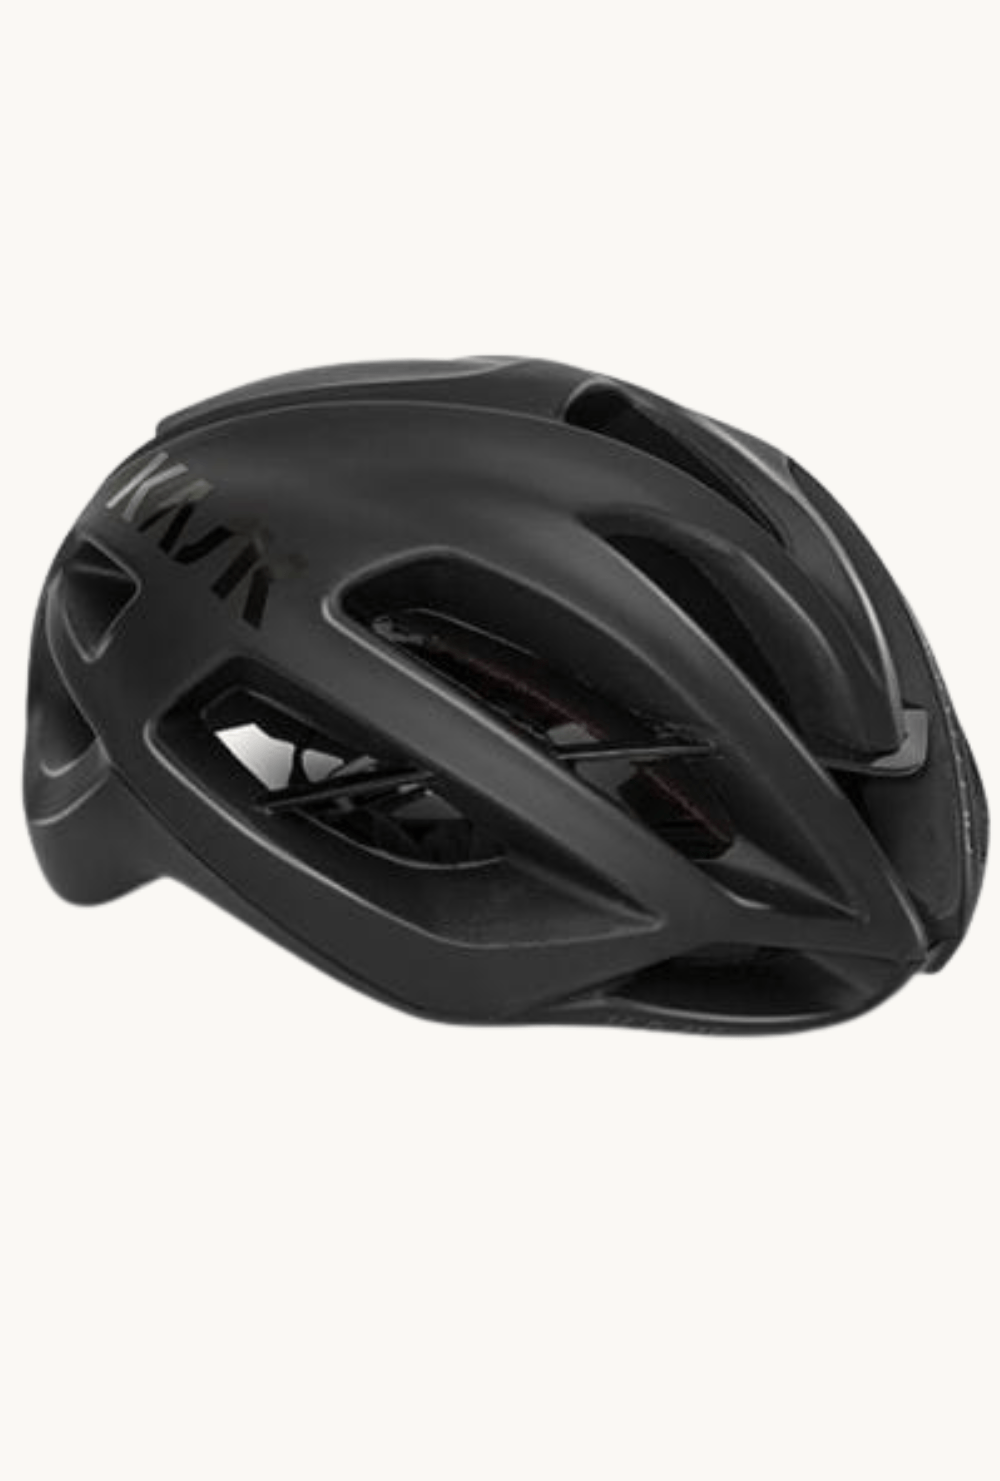 Helmet - Kask Protone Matt Blackmedium (52-58cm) / Matt Black